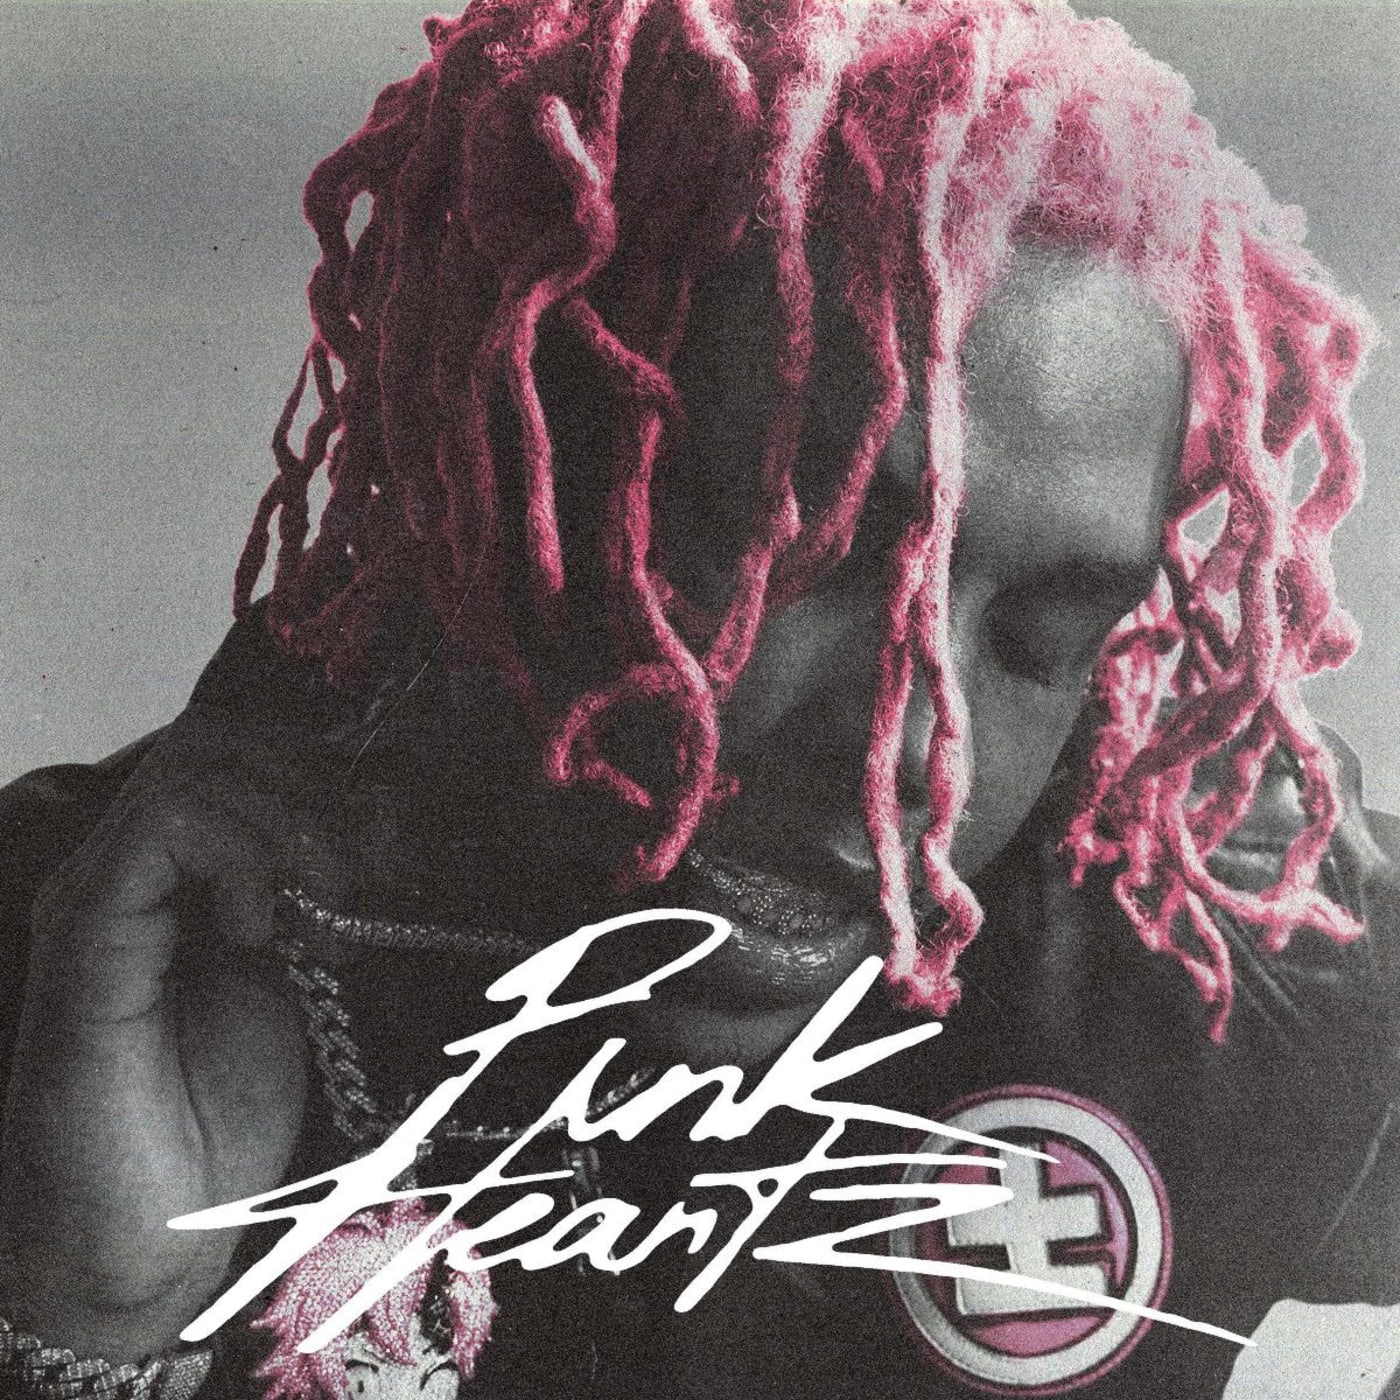 The cover art for SoFayGo's debut album 'Pink Heartz'